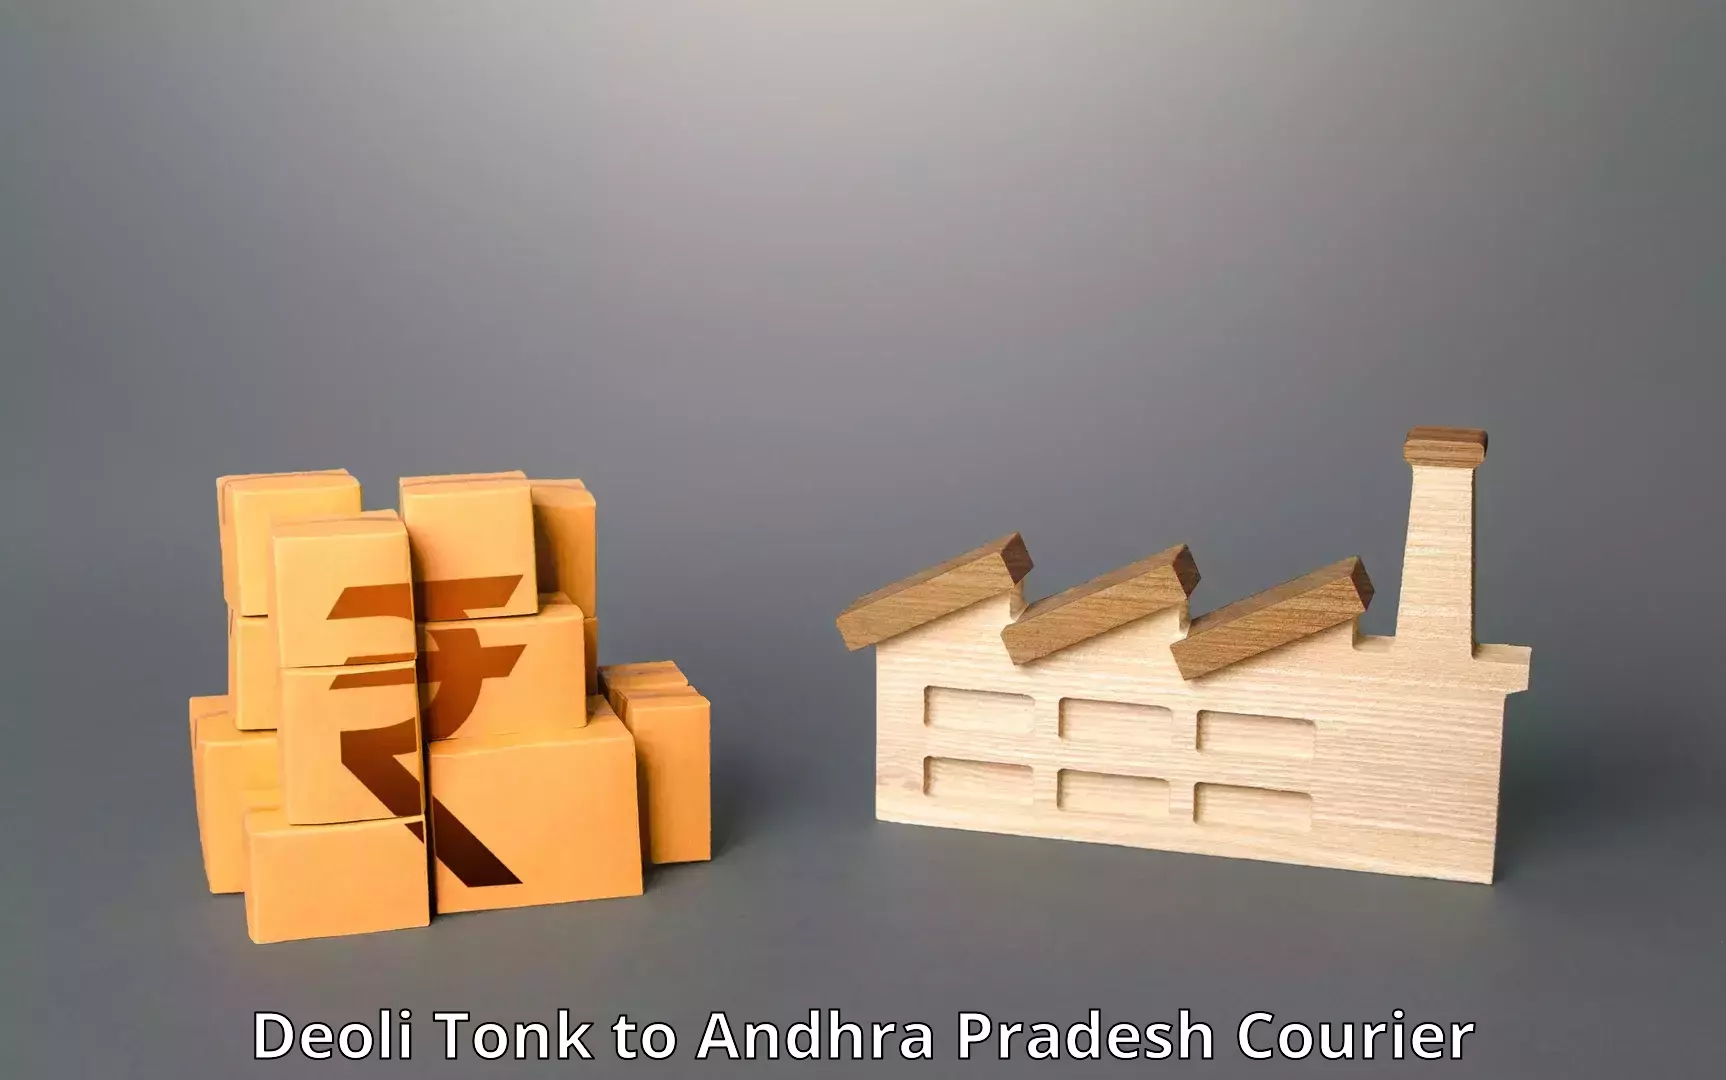 Large package courier Deoli Tonk to Puttur Tirupati